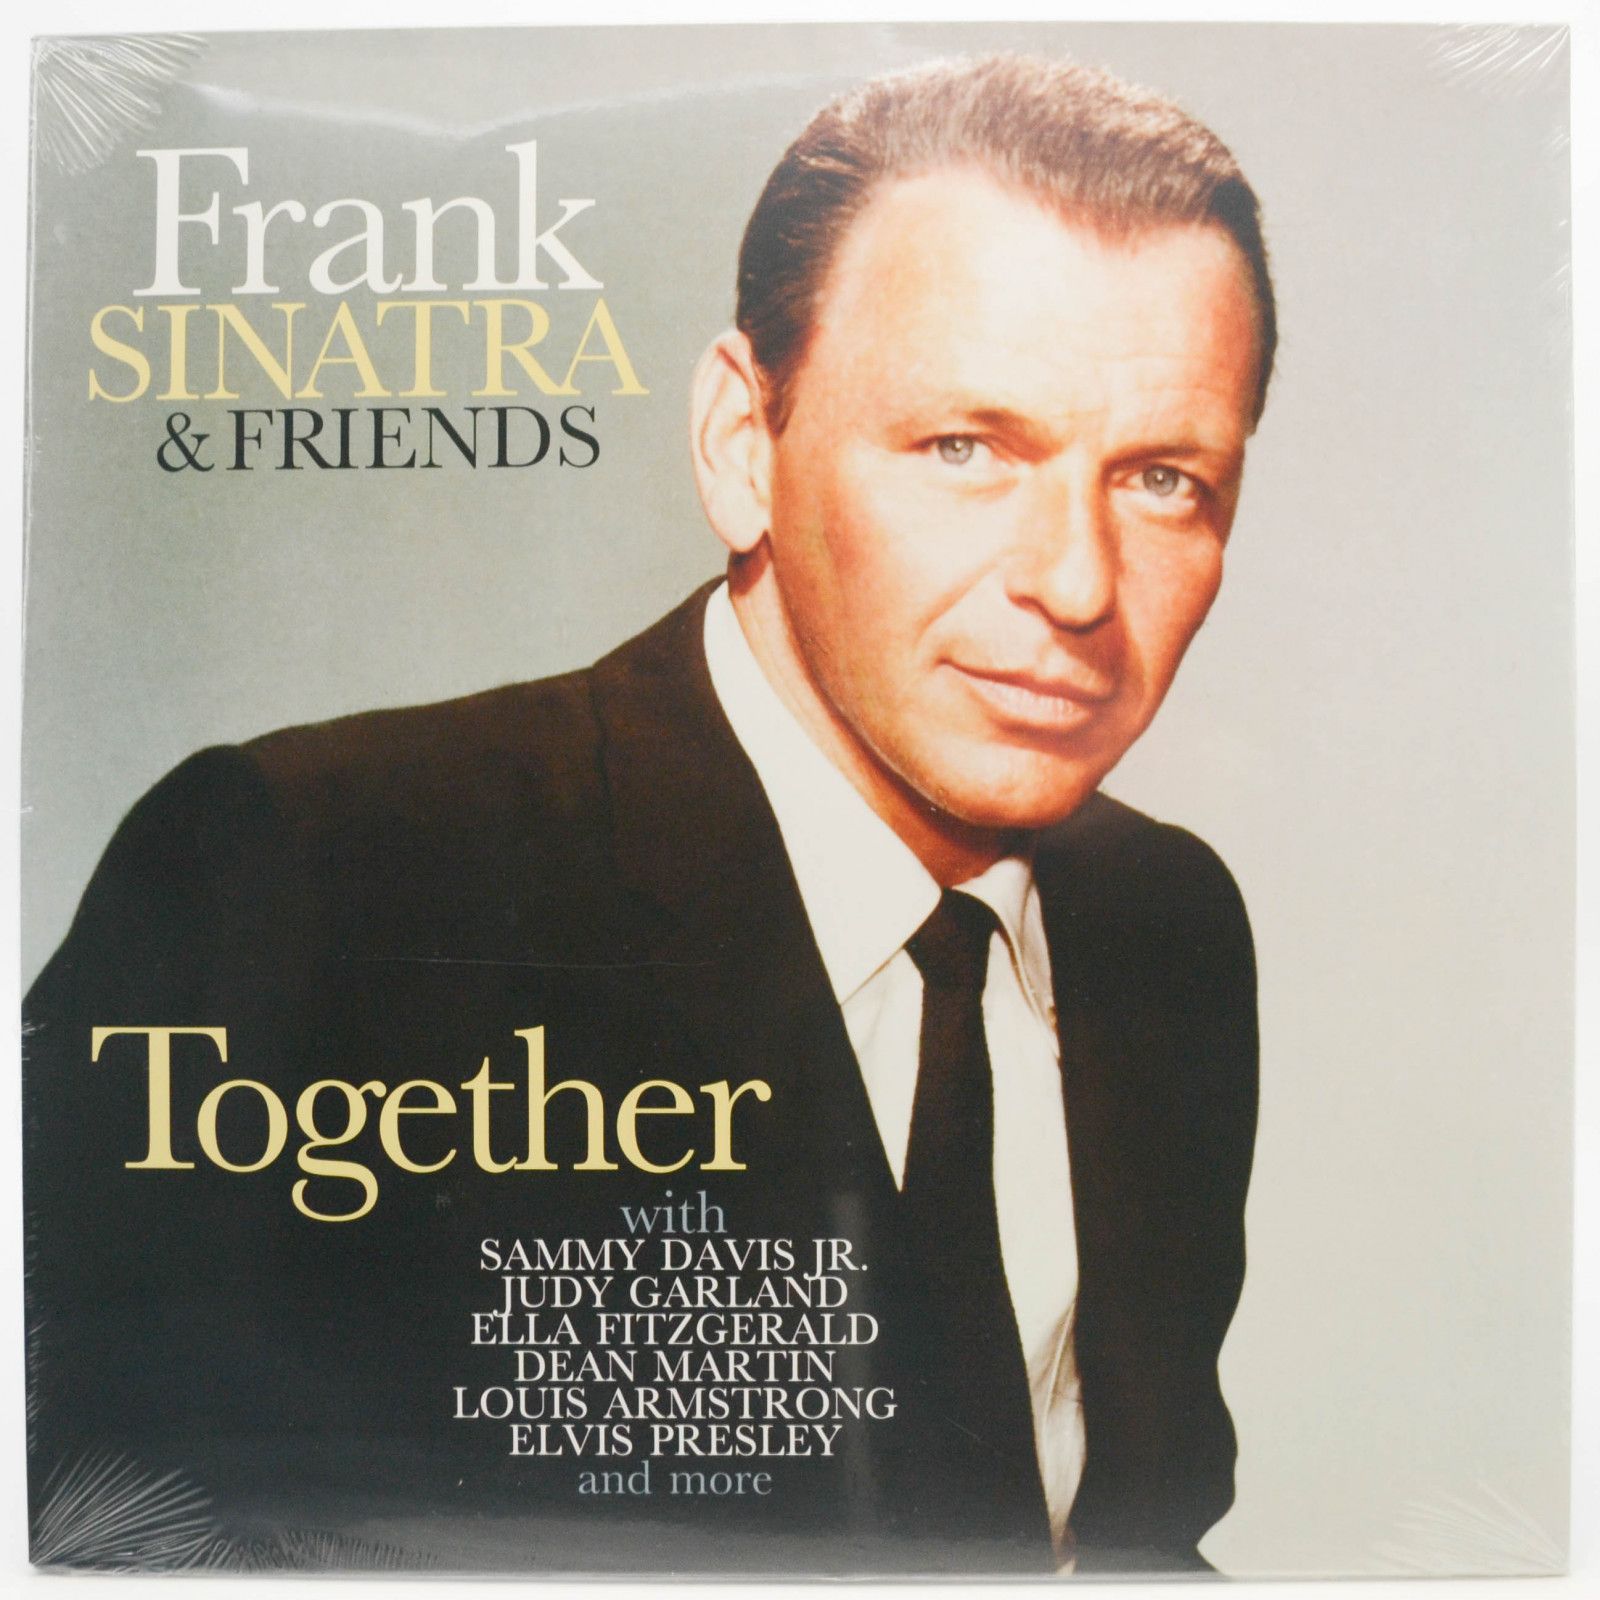 Frank Sinatra & Friends — Together, 2019